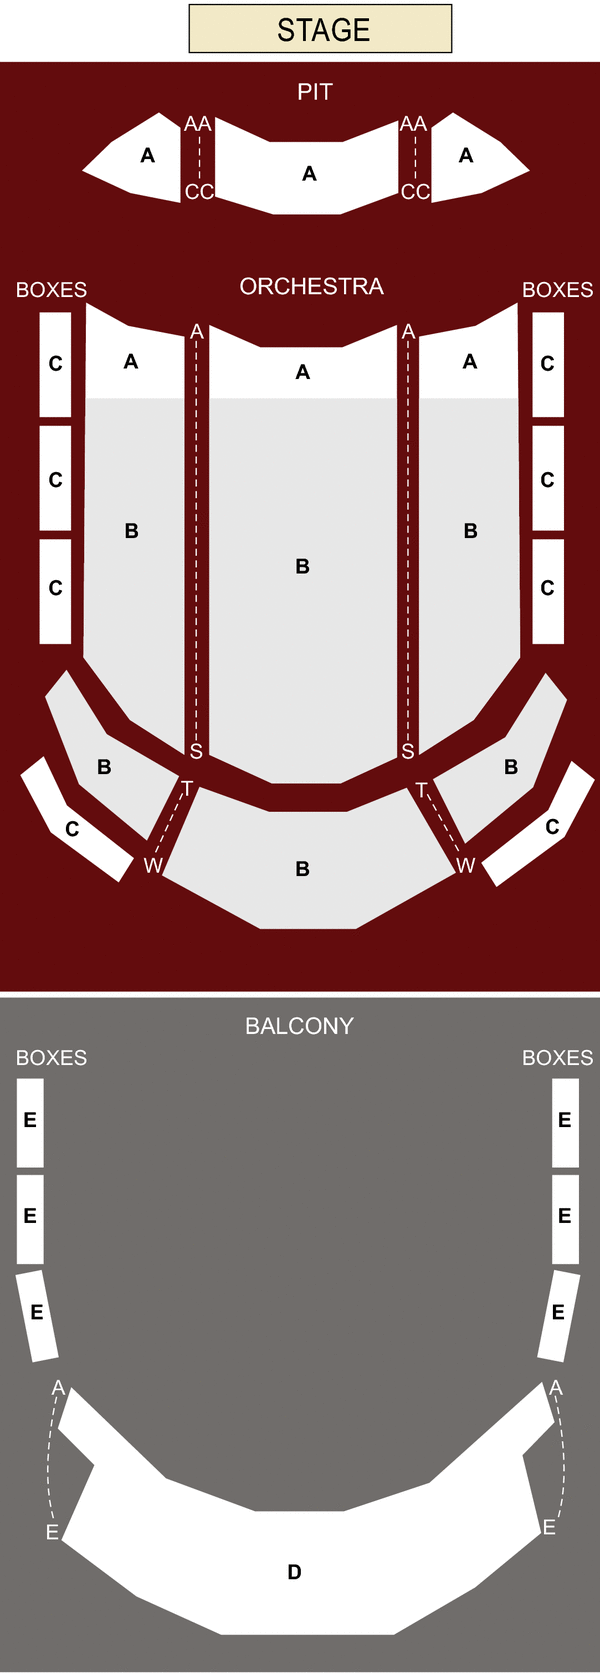 Gwinnett Performing Arts Center Seating Chart